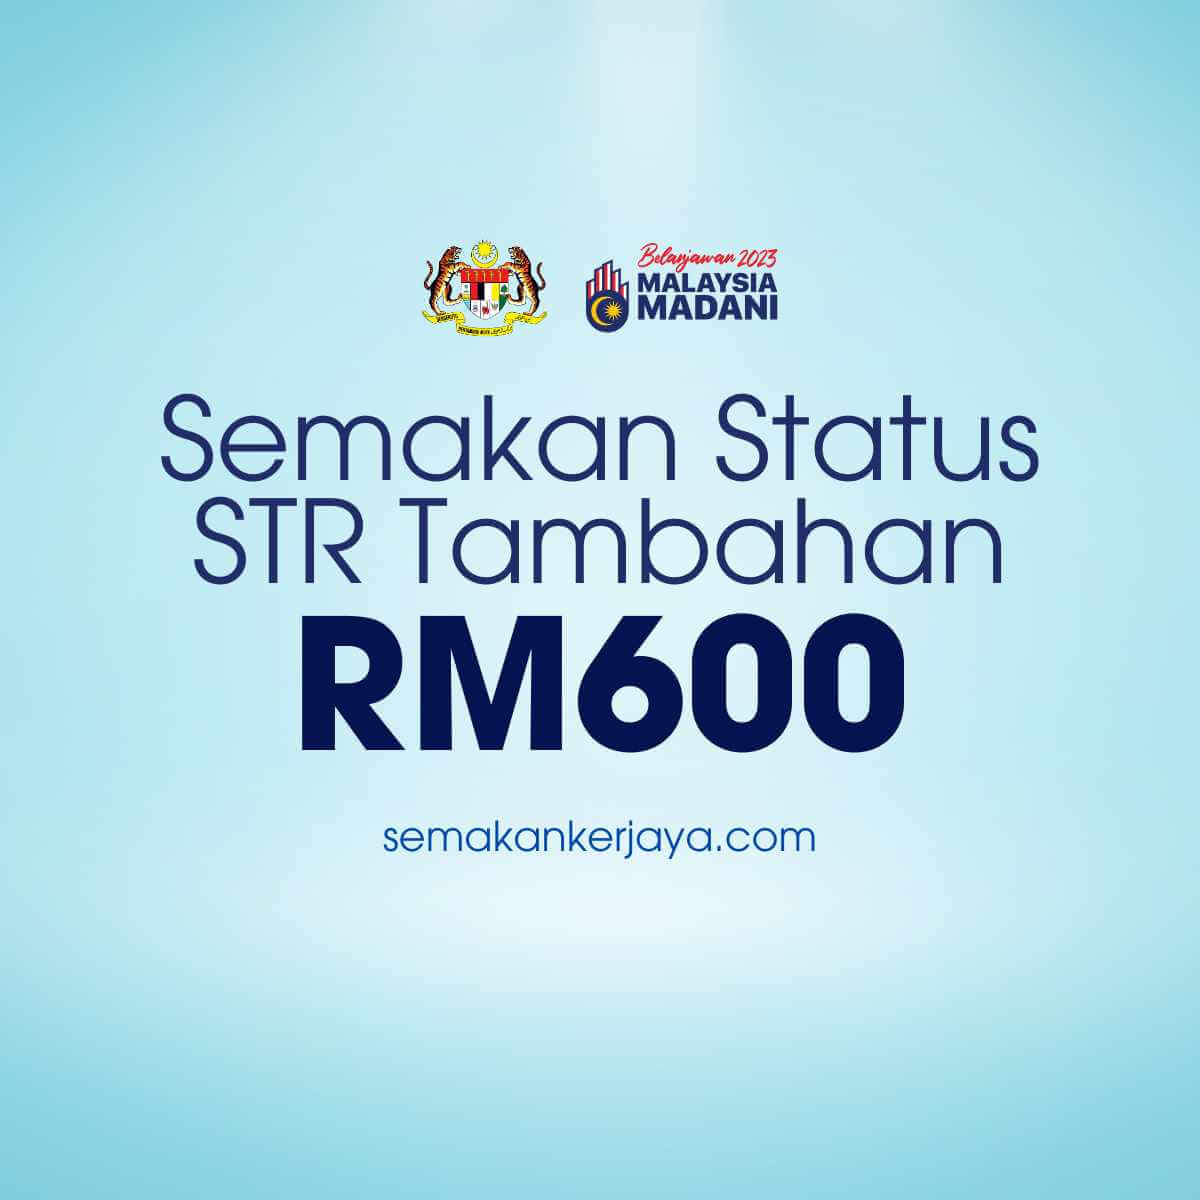 Semakan Status STR Tambahan RM600